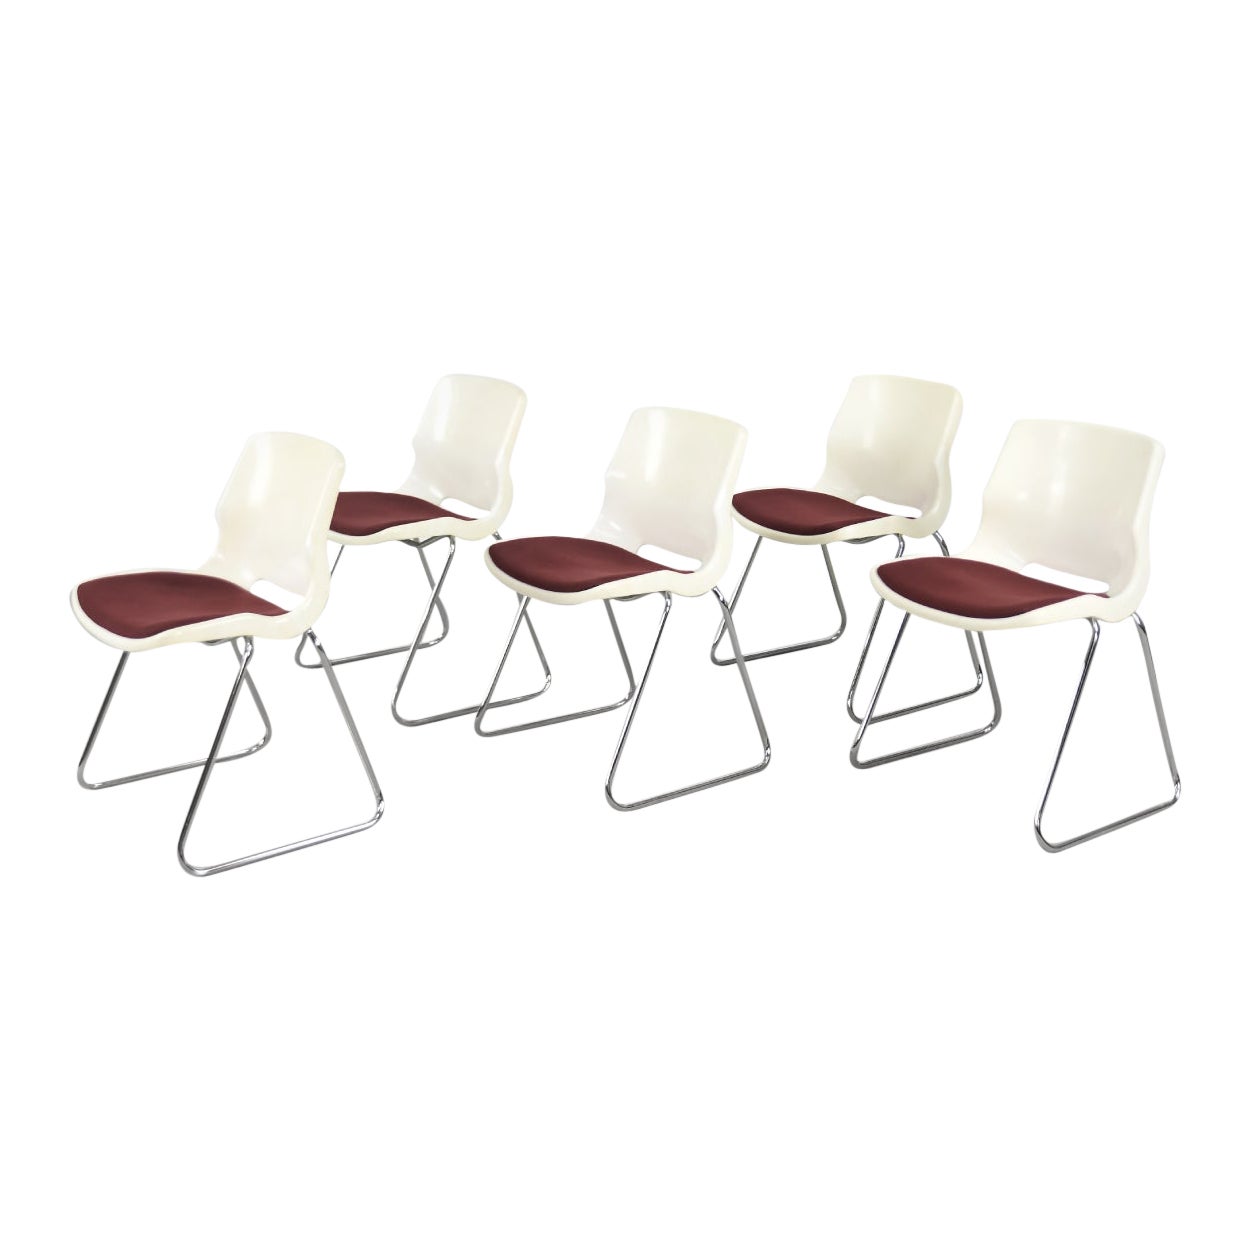 Set of 5 Vintage Mid-Century Modern Scandinavian Plastic & Fabric Chairs, 1970s